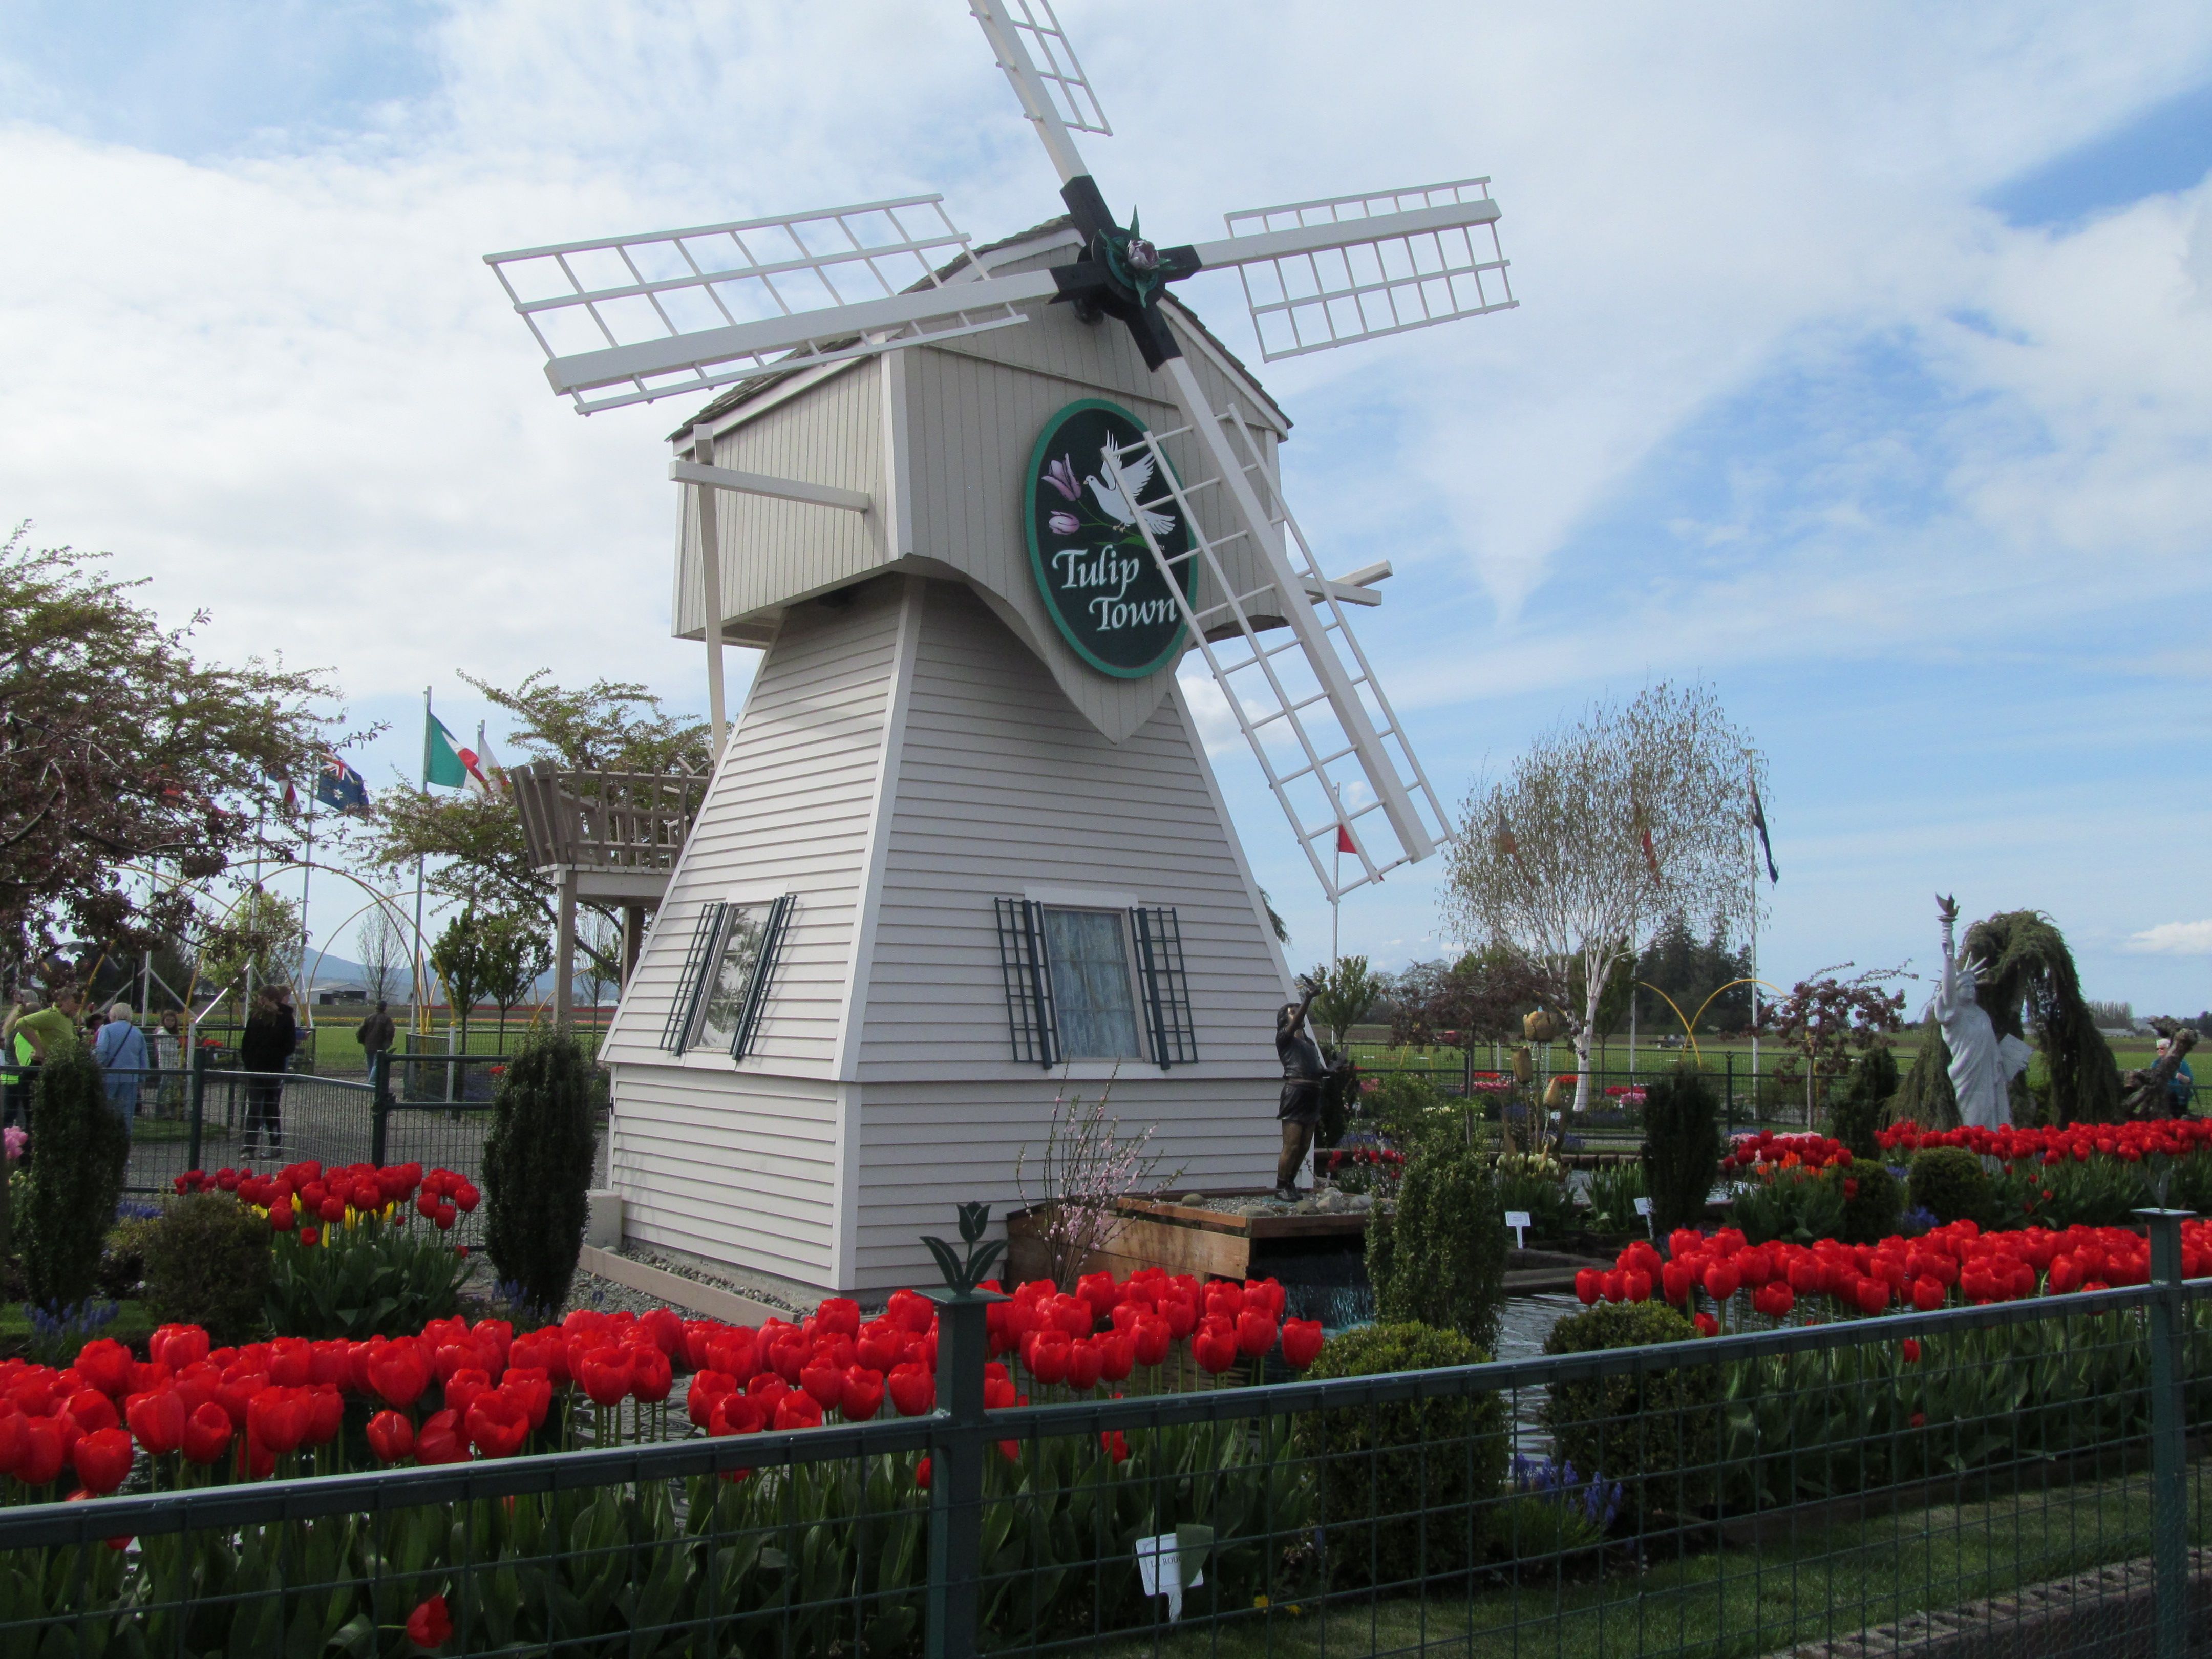 A windmill at Tulip Town in Skagit Valley | Windmills | Pinterest ...